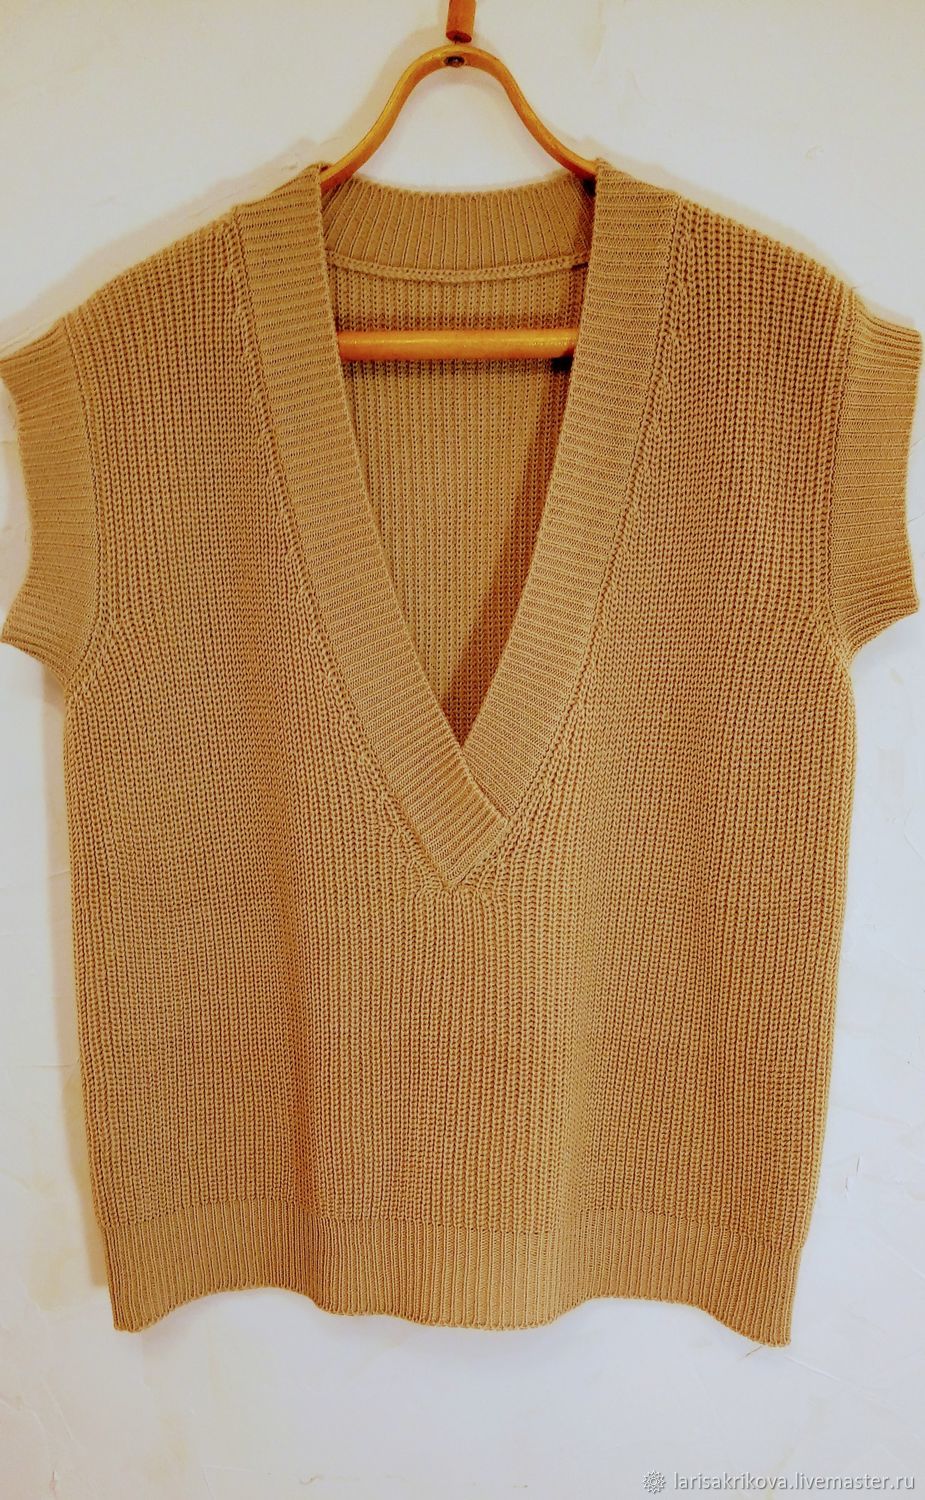 Oversize vest knitted with English elastic band, Vests, Verhnedneprovsky,  Фото №1